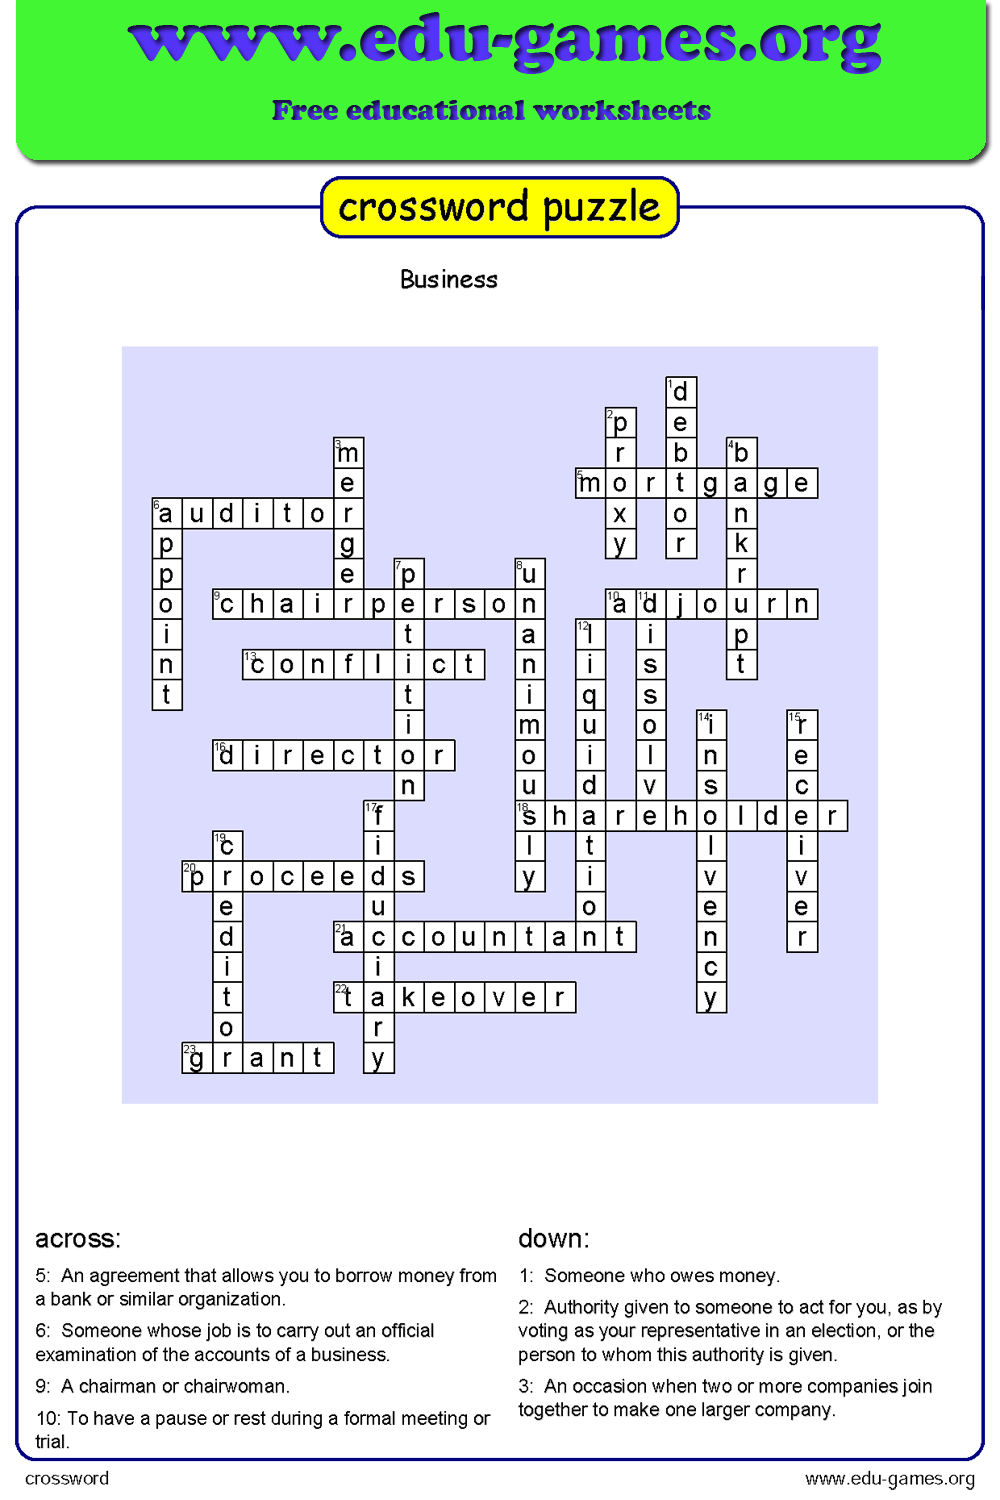 Free Crossword Maker For Kids - The Puzzle Maker Site - Printable Crossword Generator